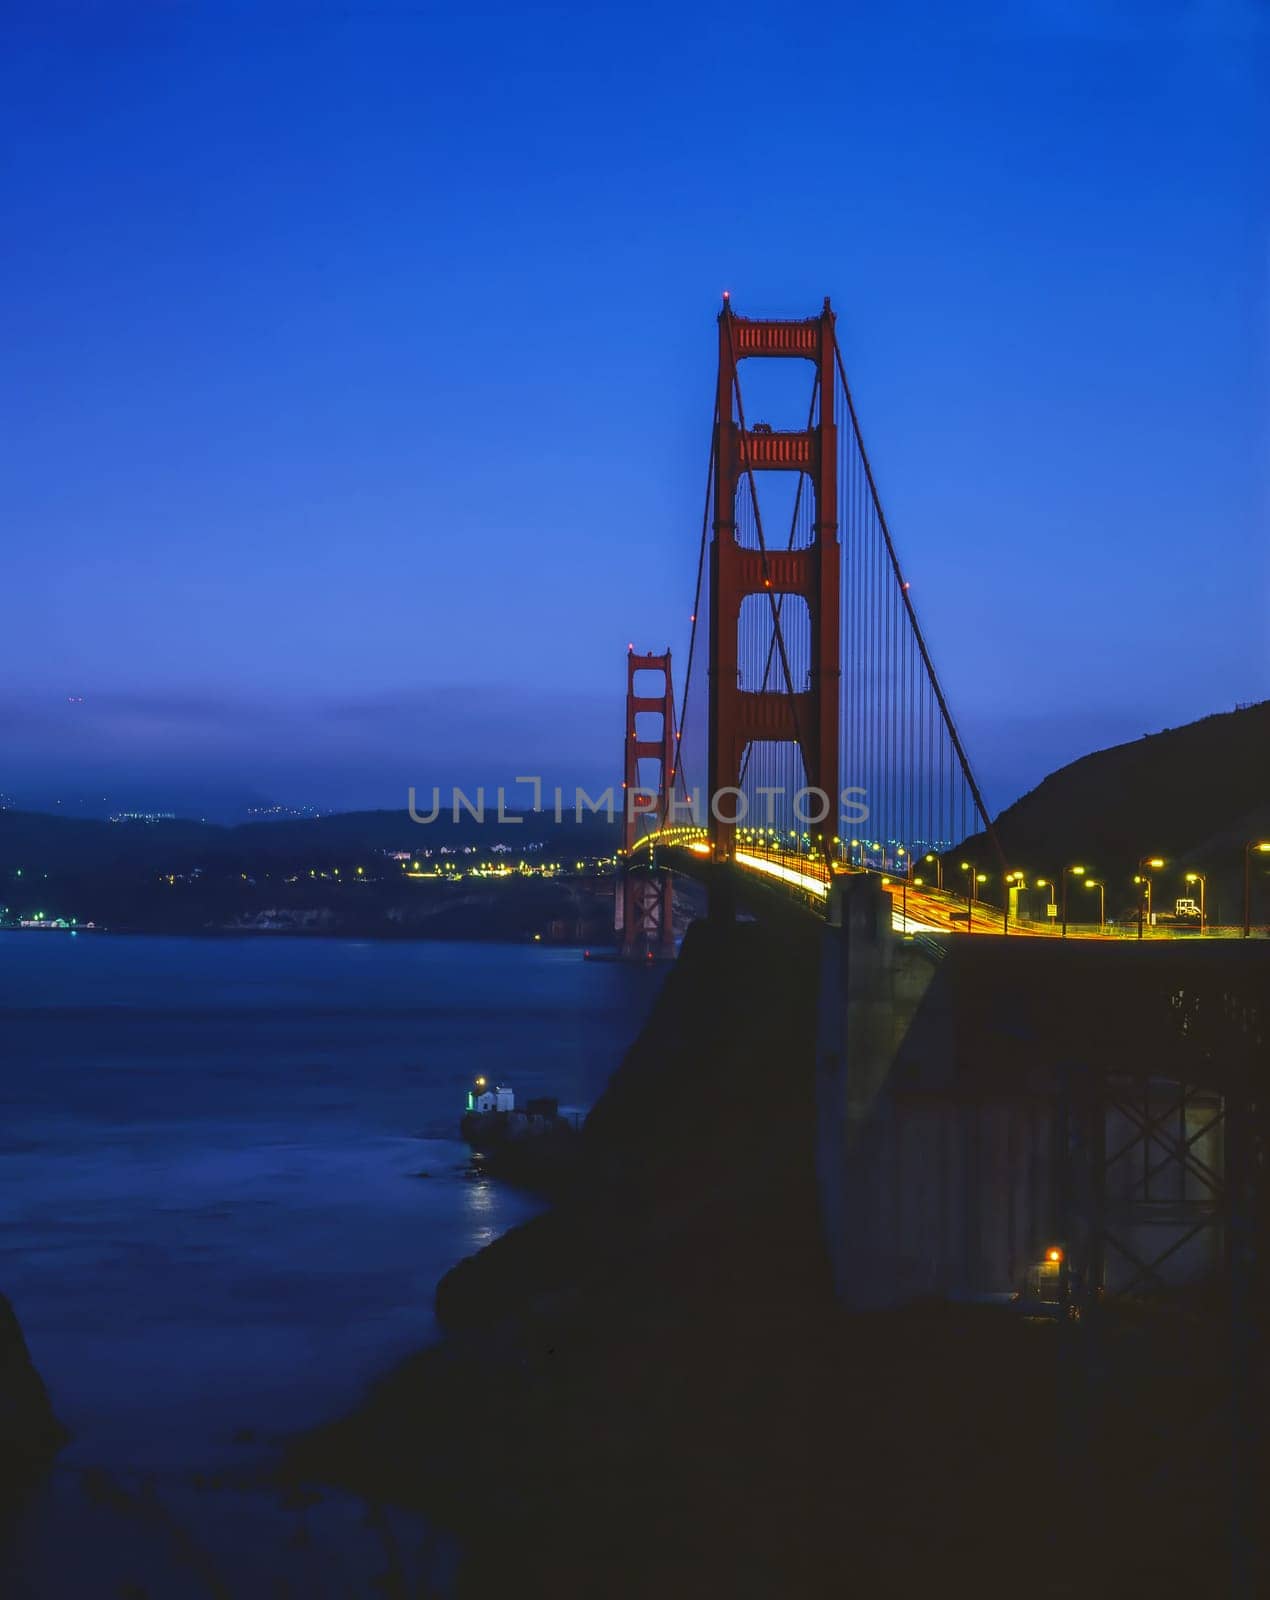 Golden Gate Bridge, California by jol66